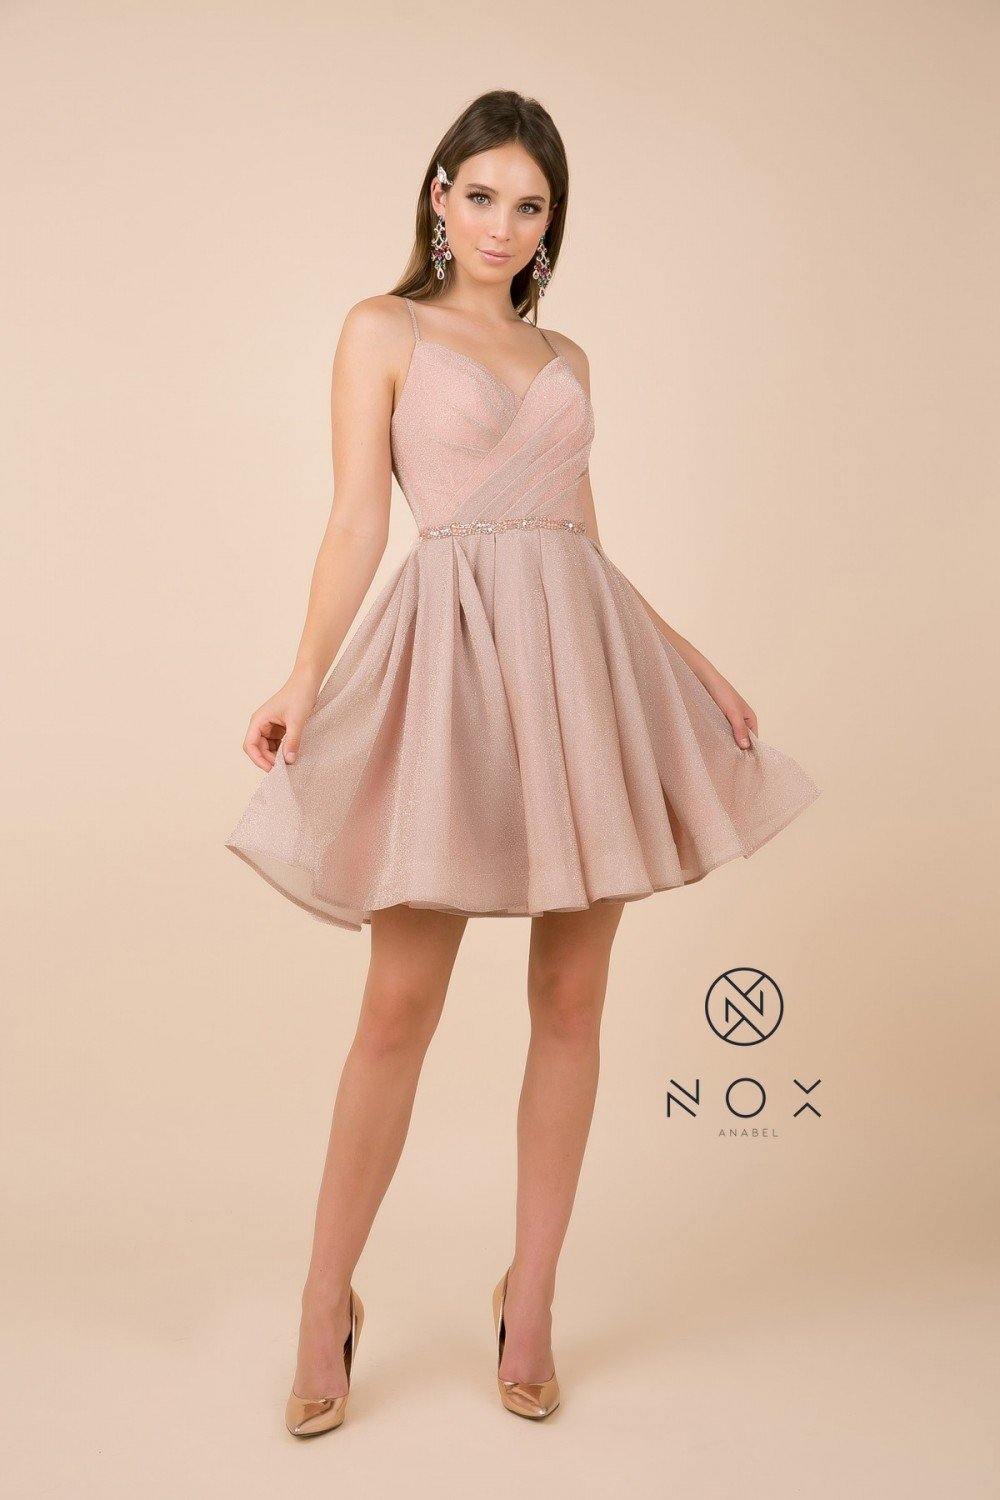 Short Prom Dress Sale - The Dress Outlet